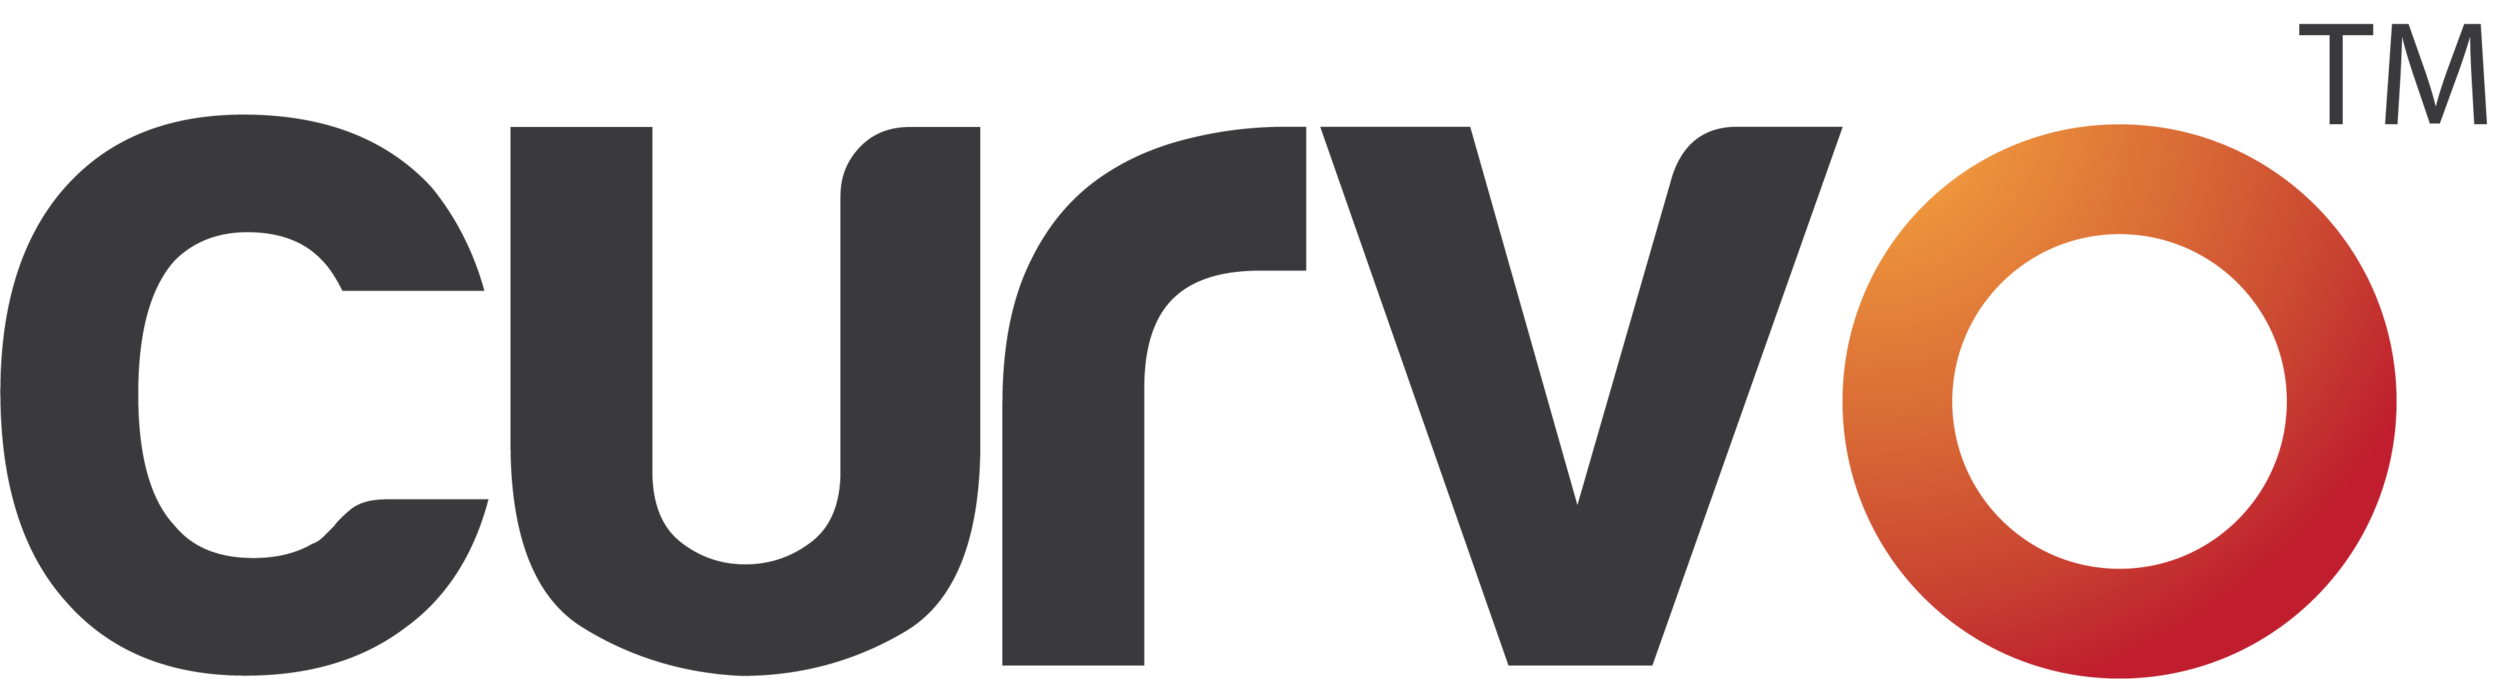 Curvo_Logo-3.png